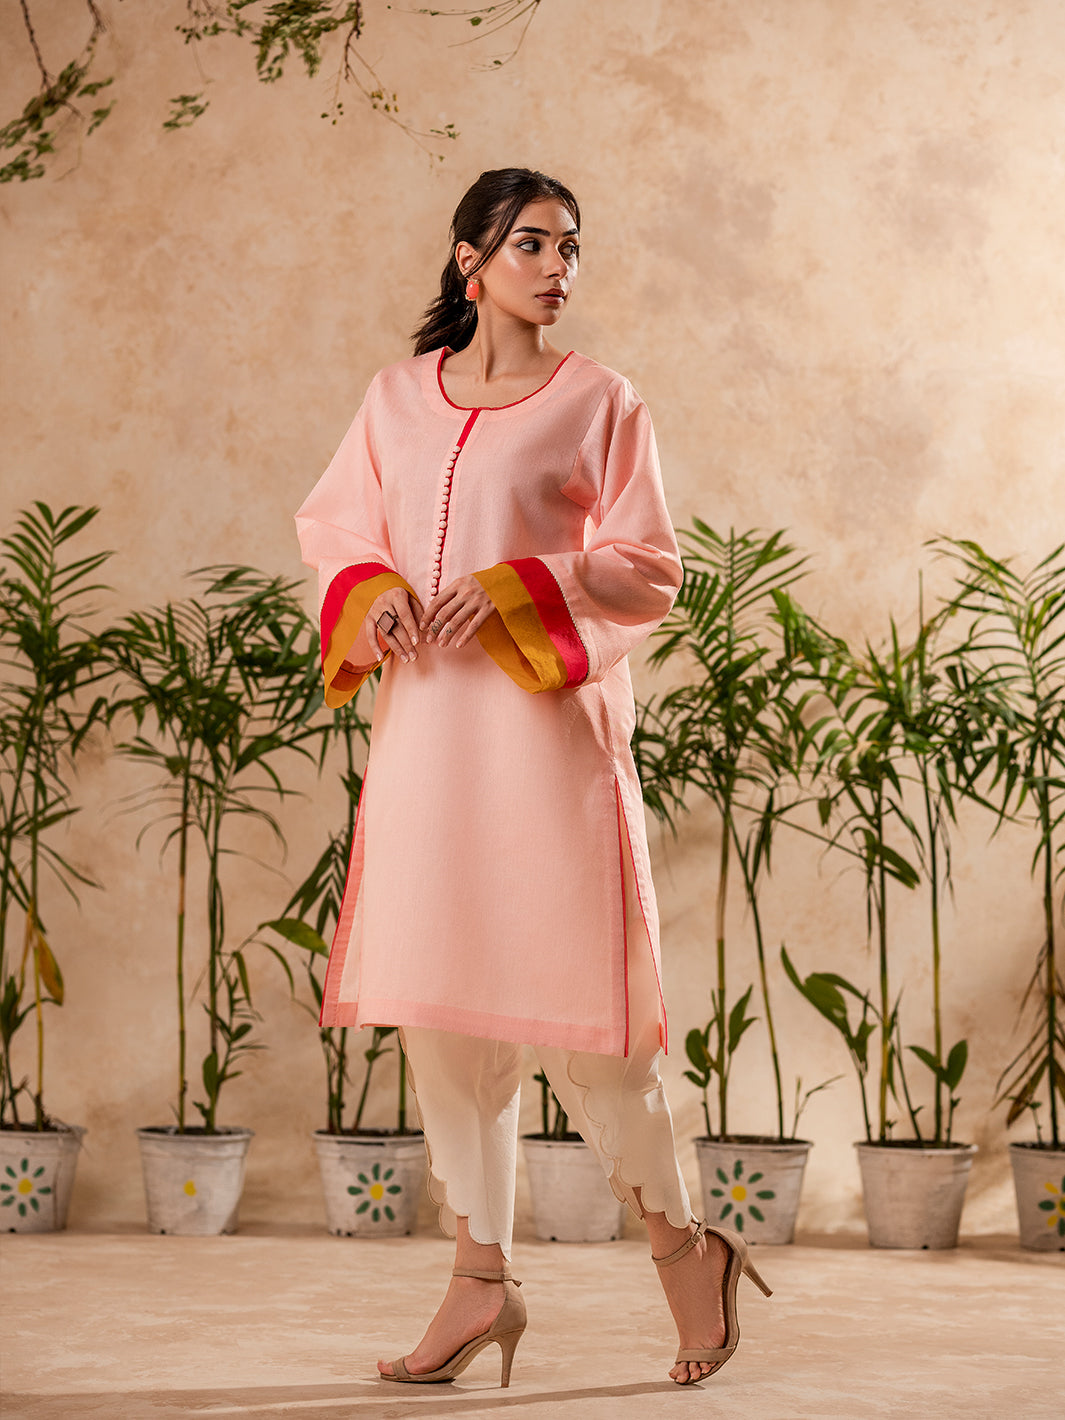 Pret Collection - Fozia Khalid - Basics - Blush Pink Tunic